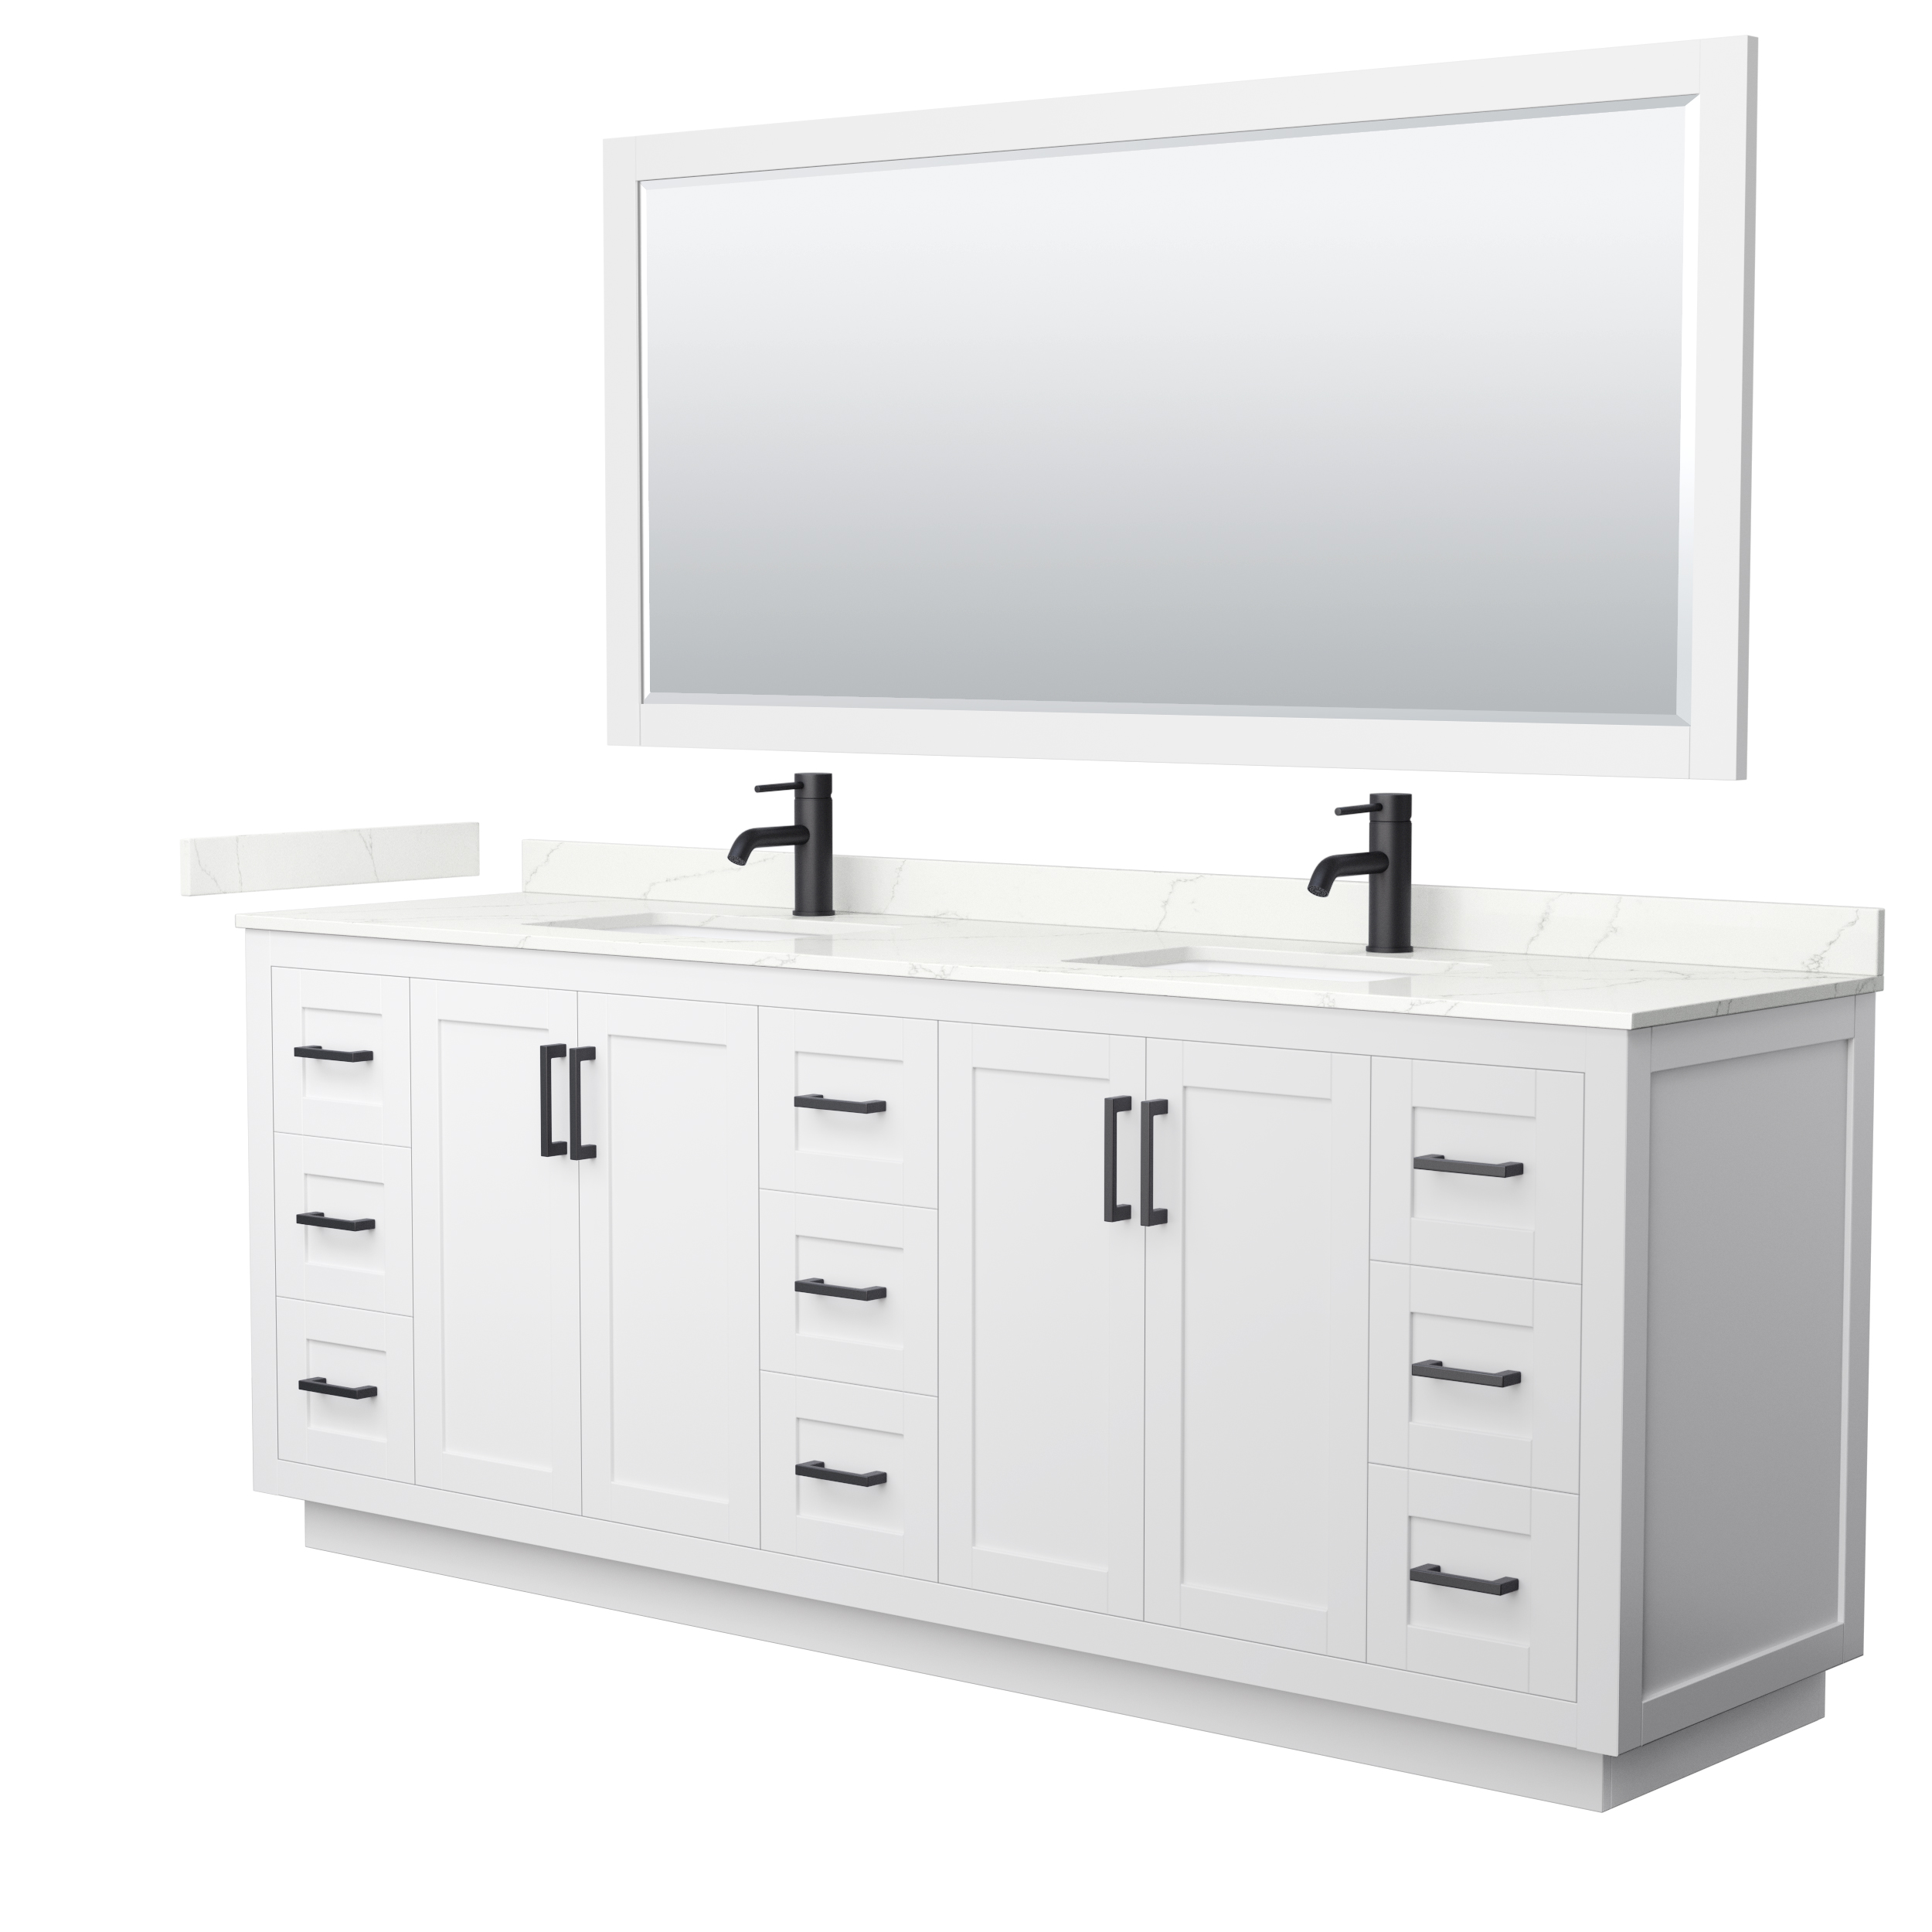 Miranda 84" Double Vanity with optional Carrara Marble Counter - White WC-2929-84-DBL-VAN-WHT__